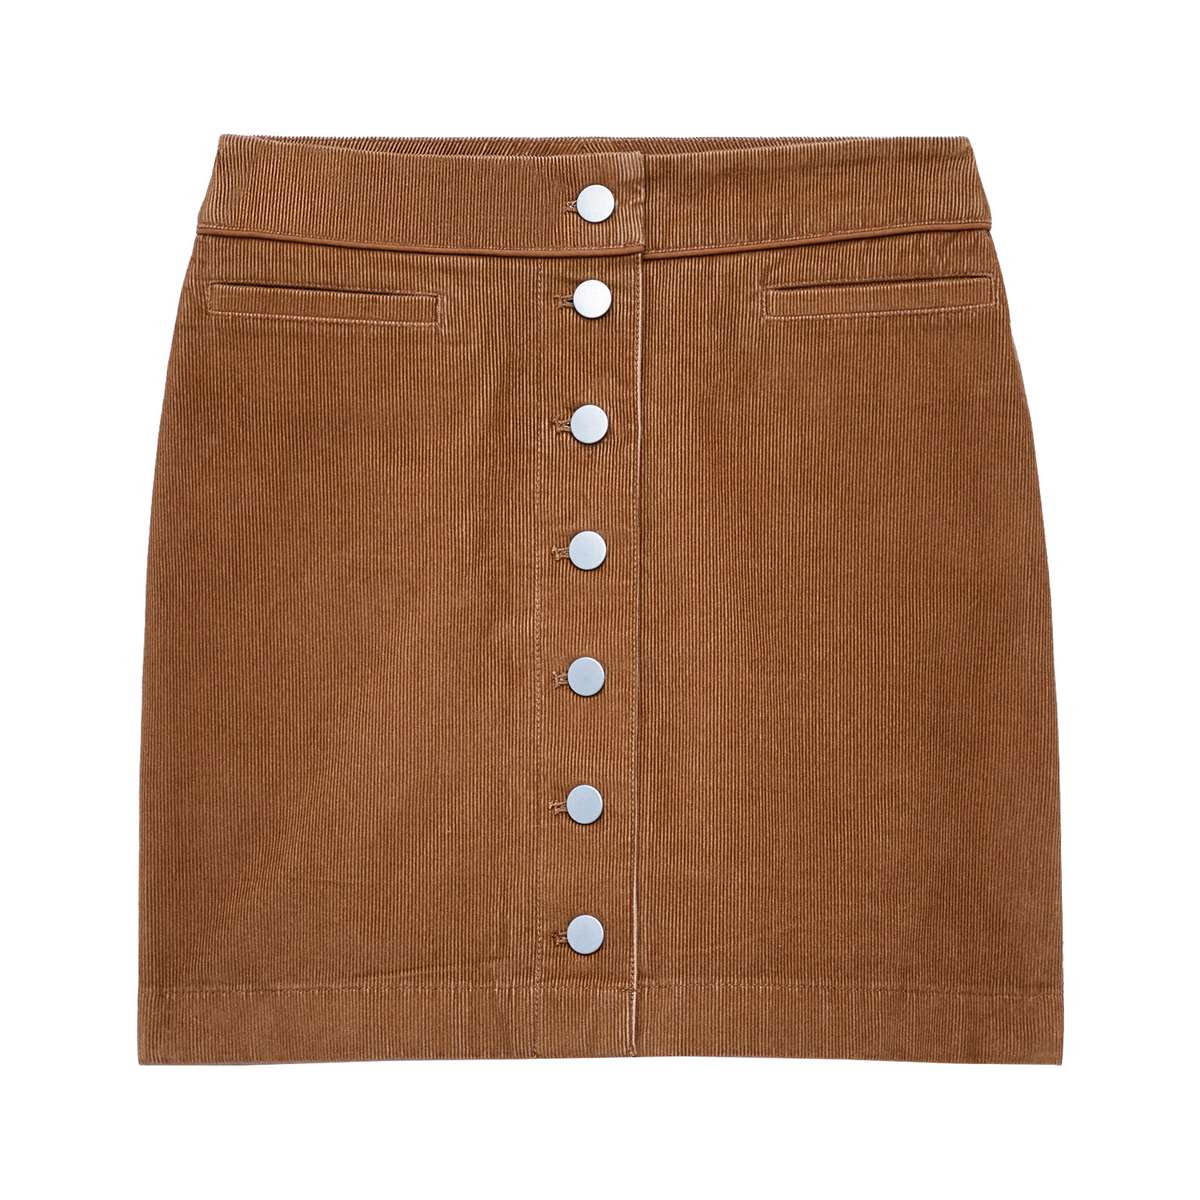 Old-School Corduroy Skirt